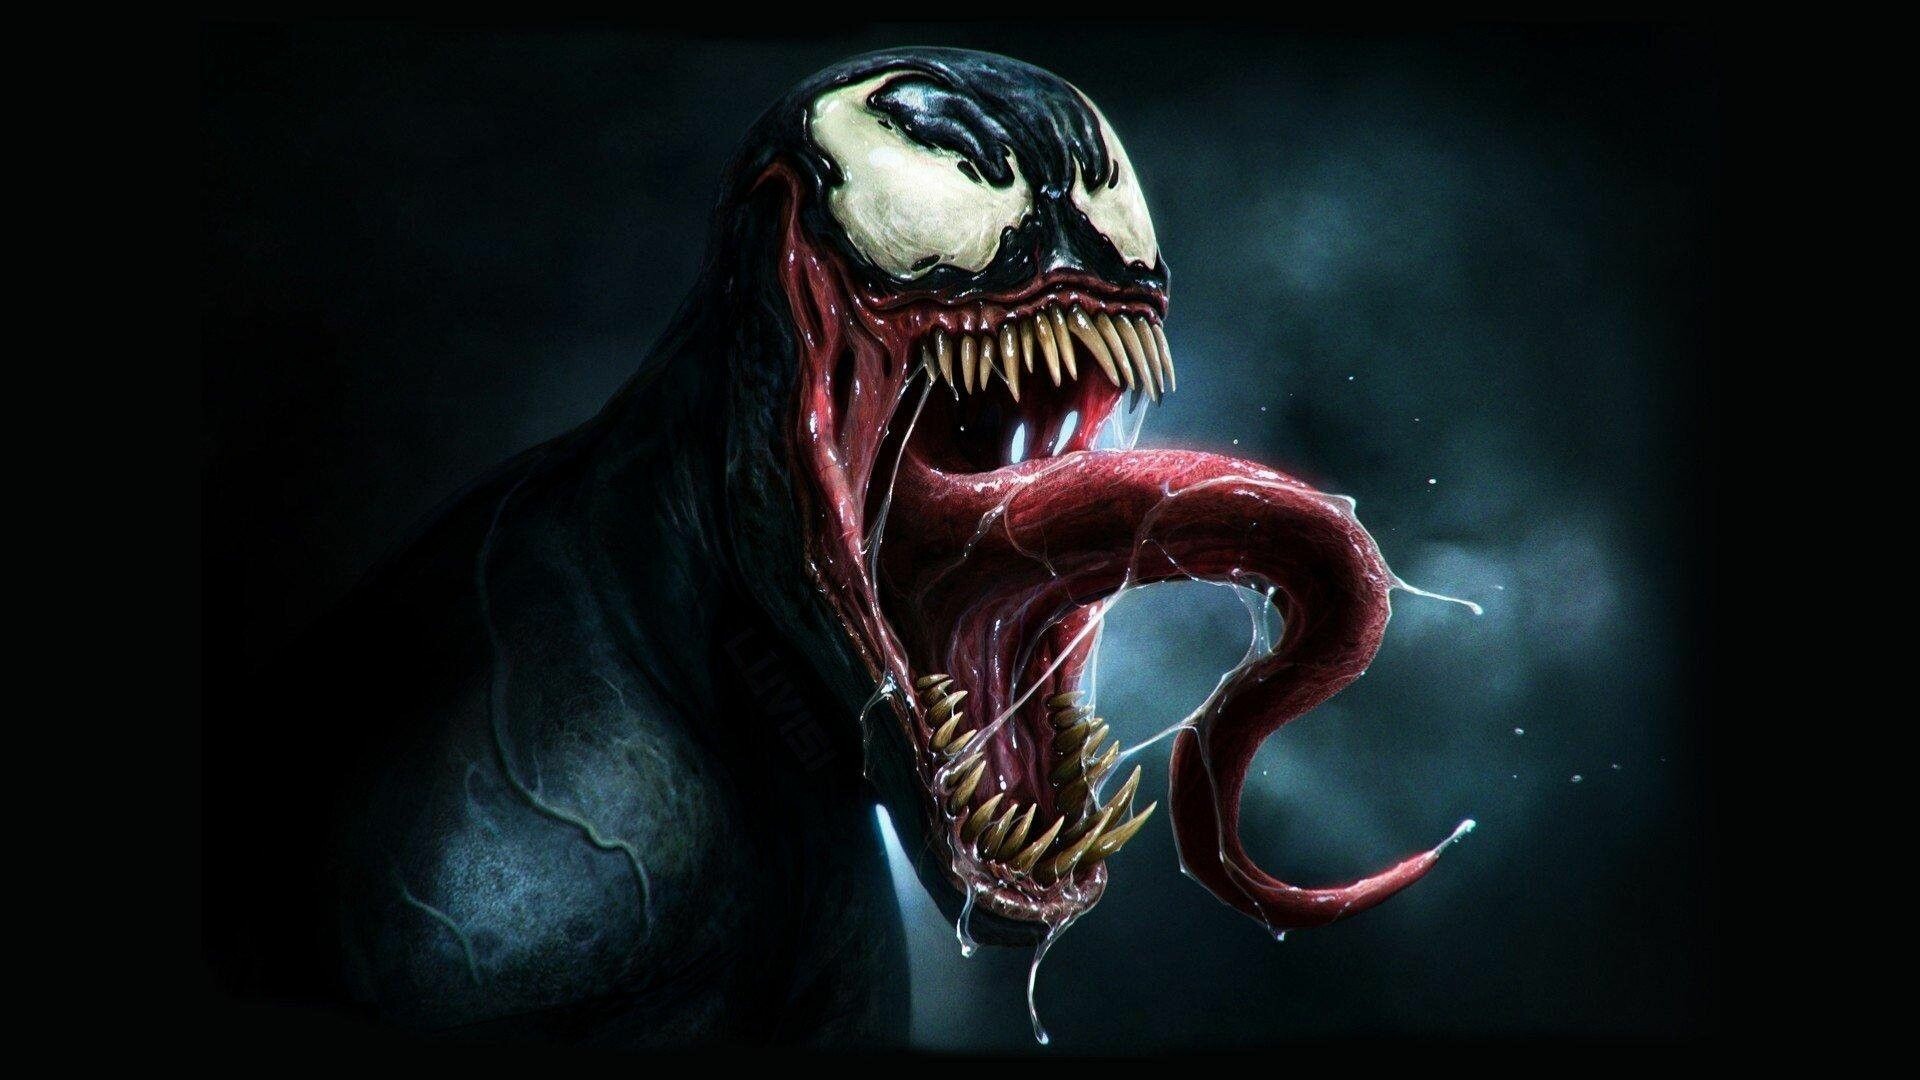 Marvel Villain: Venom, A sentient alien symbiote with an amorphous, liquid-like form. 1920x1080 Full HD Wallpaper.